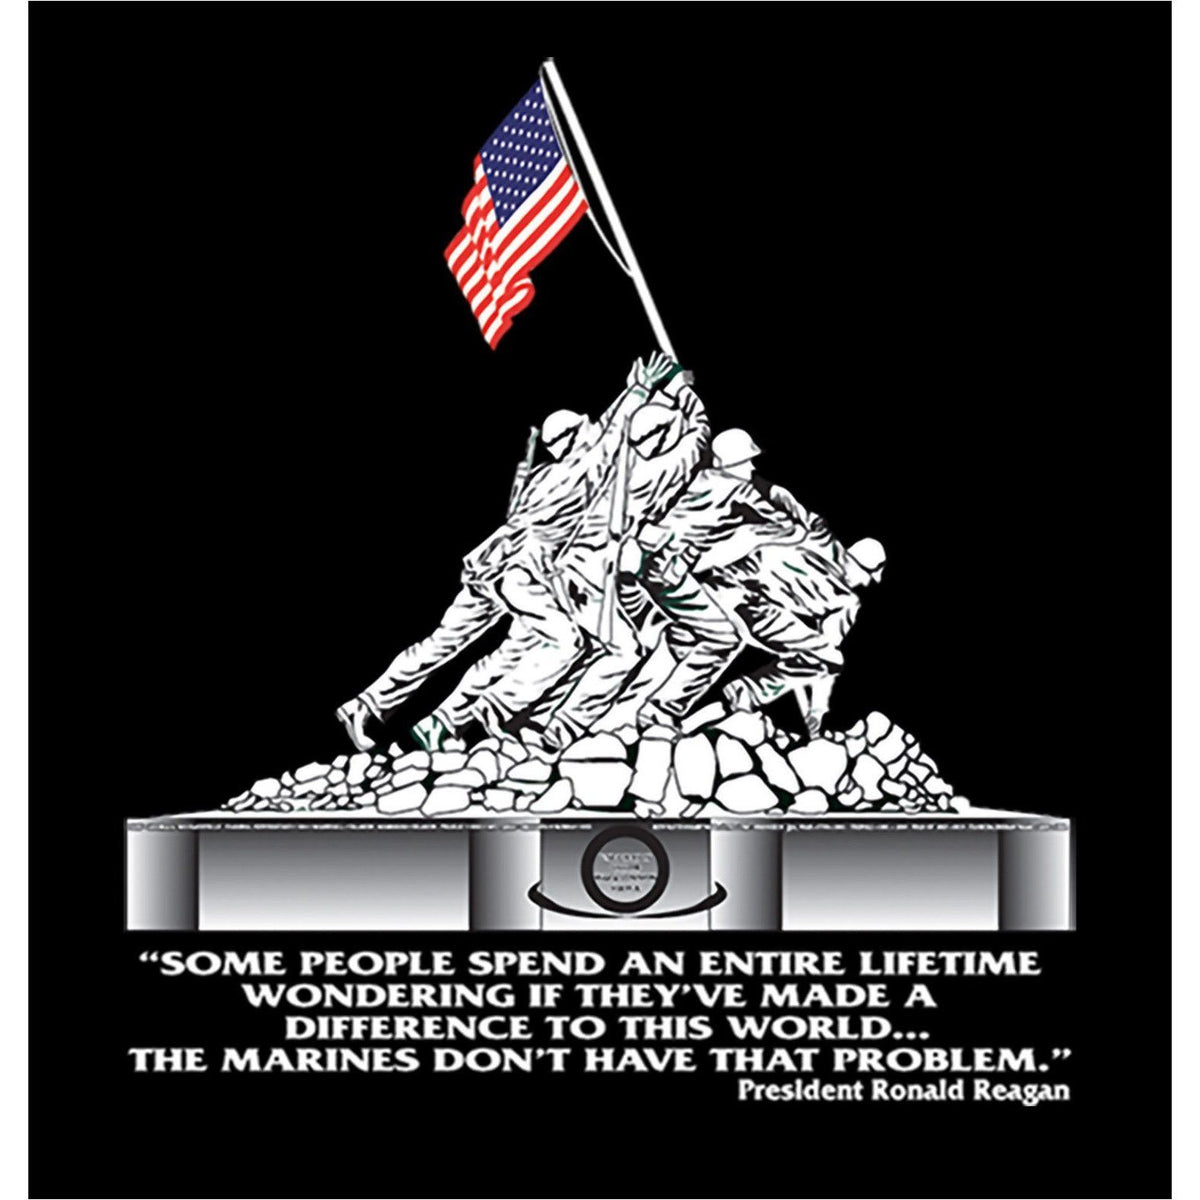 Iwo Jima TFT Front & Back Hoodie TFT Sweatshirt/hoodie marinecorpsdirecttft 